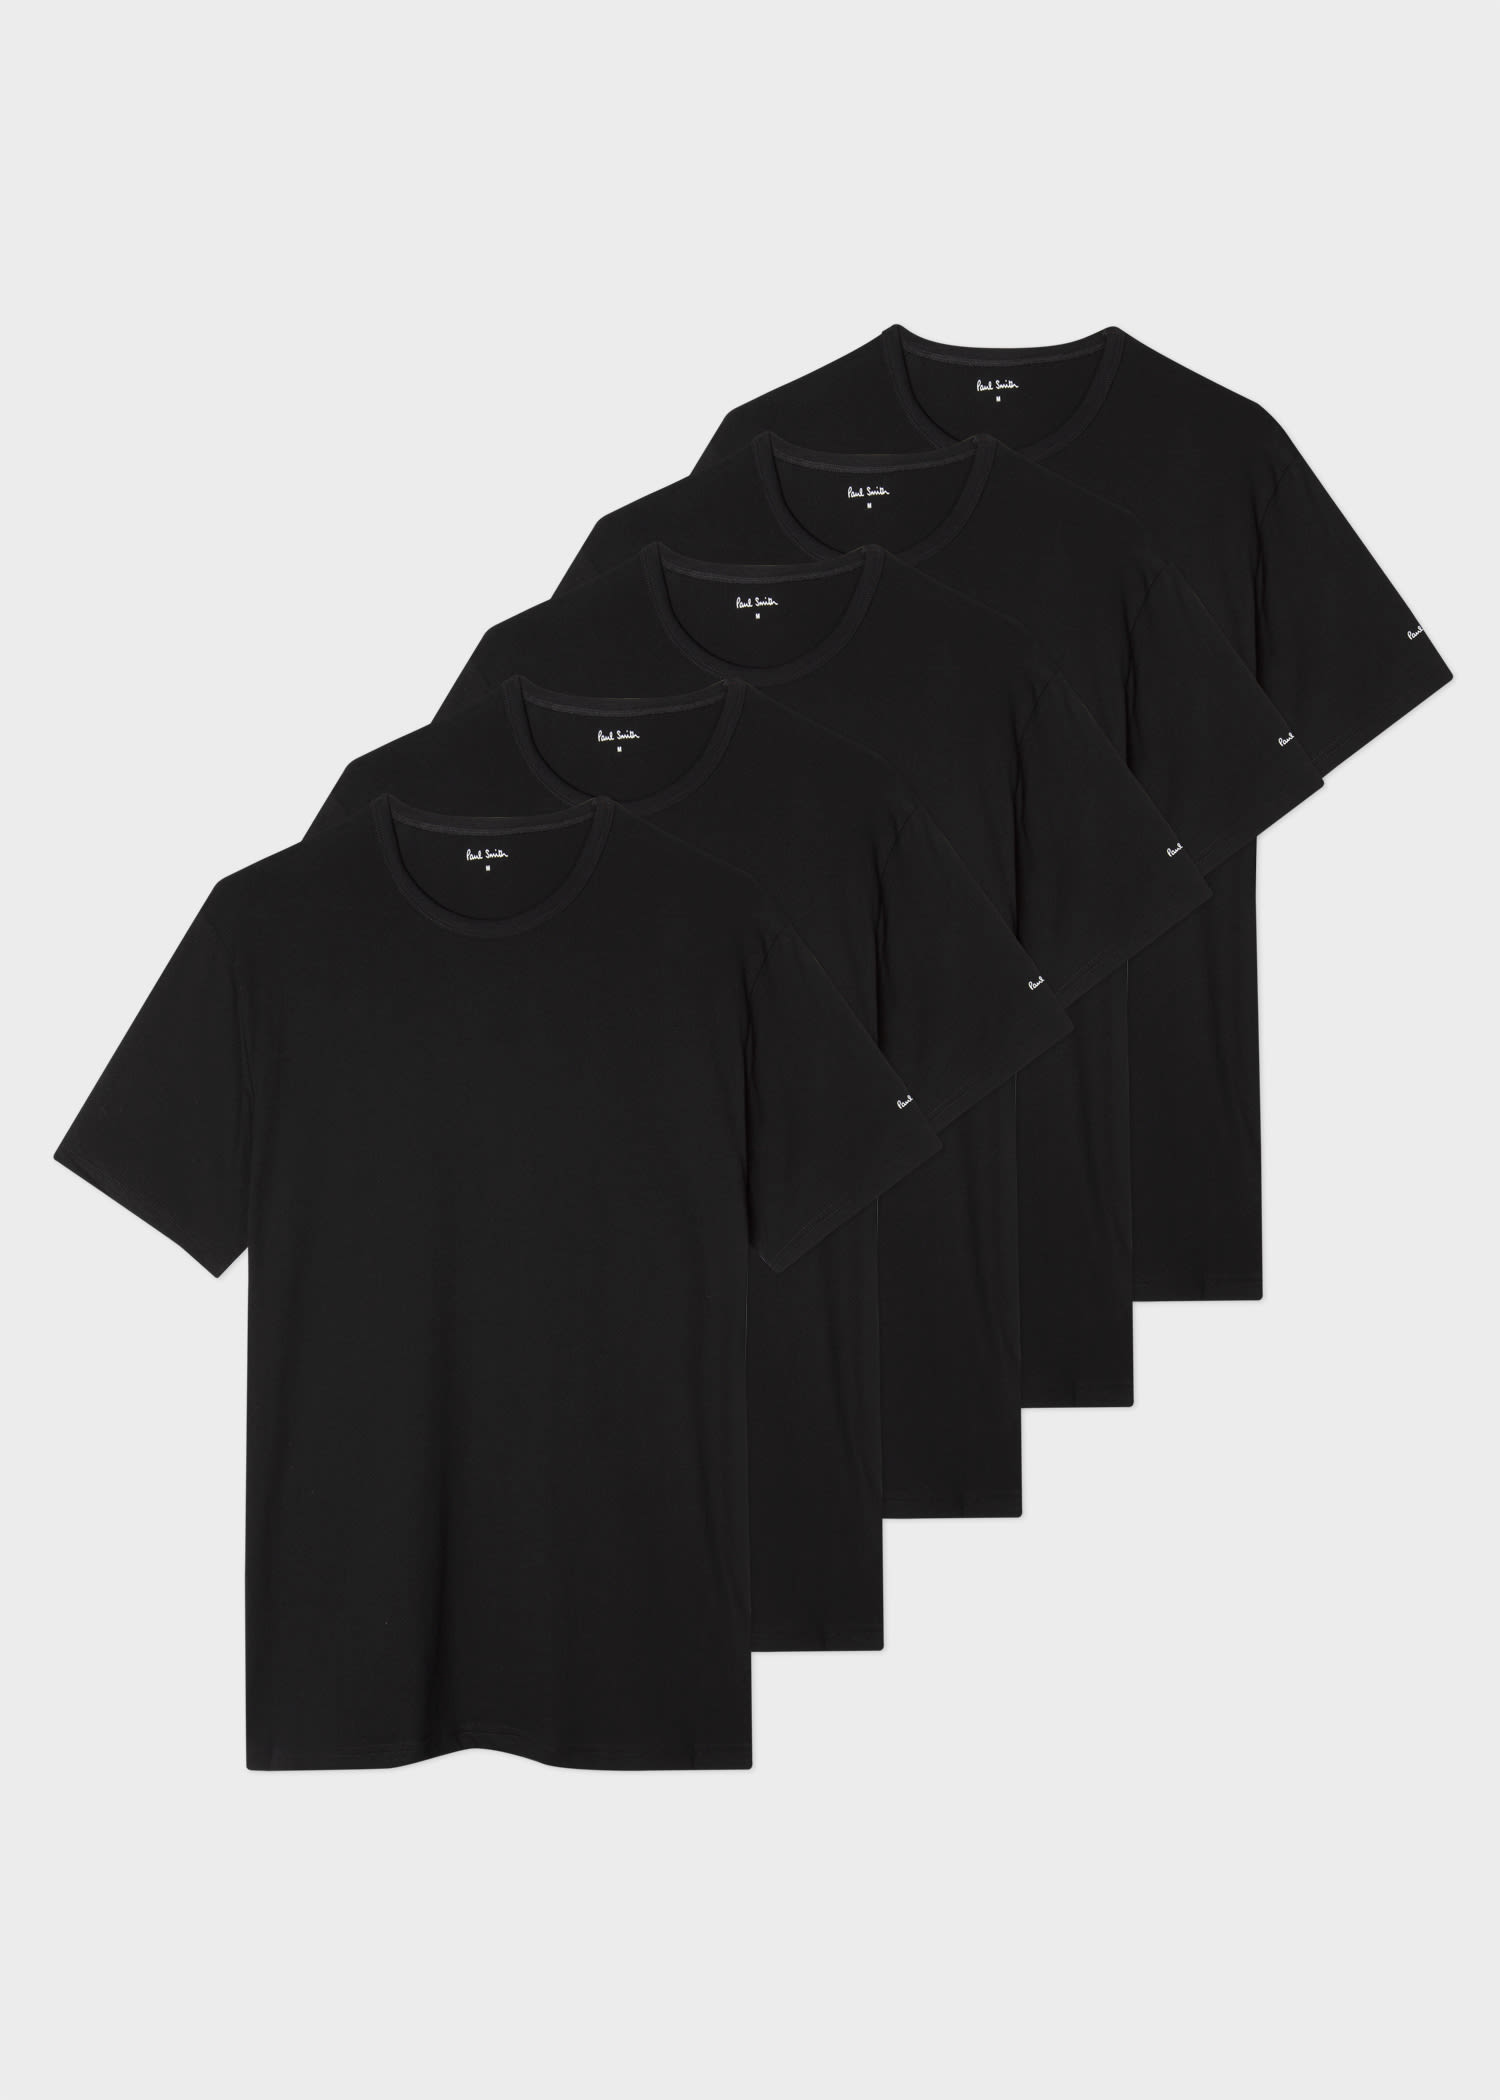 Black Cotton T-Shirts Five Pack